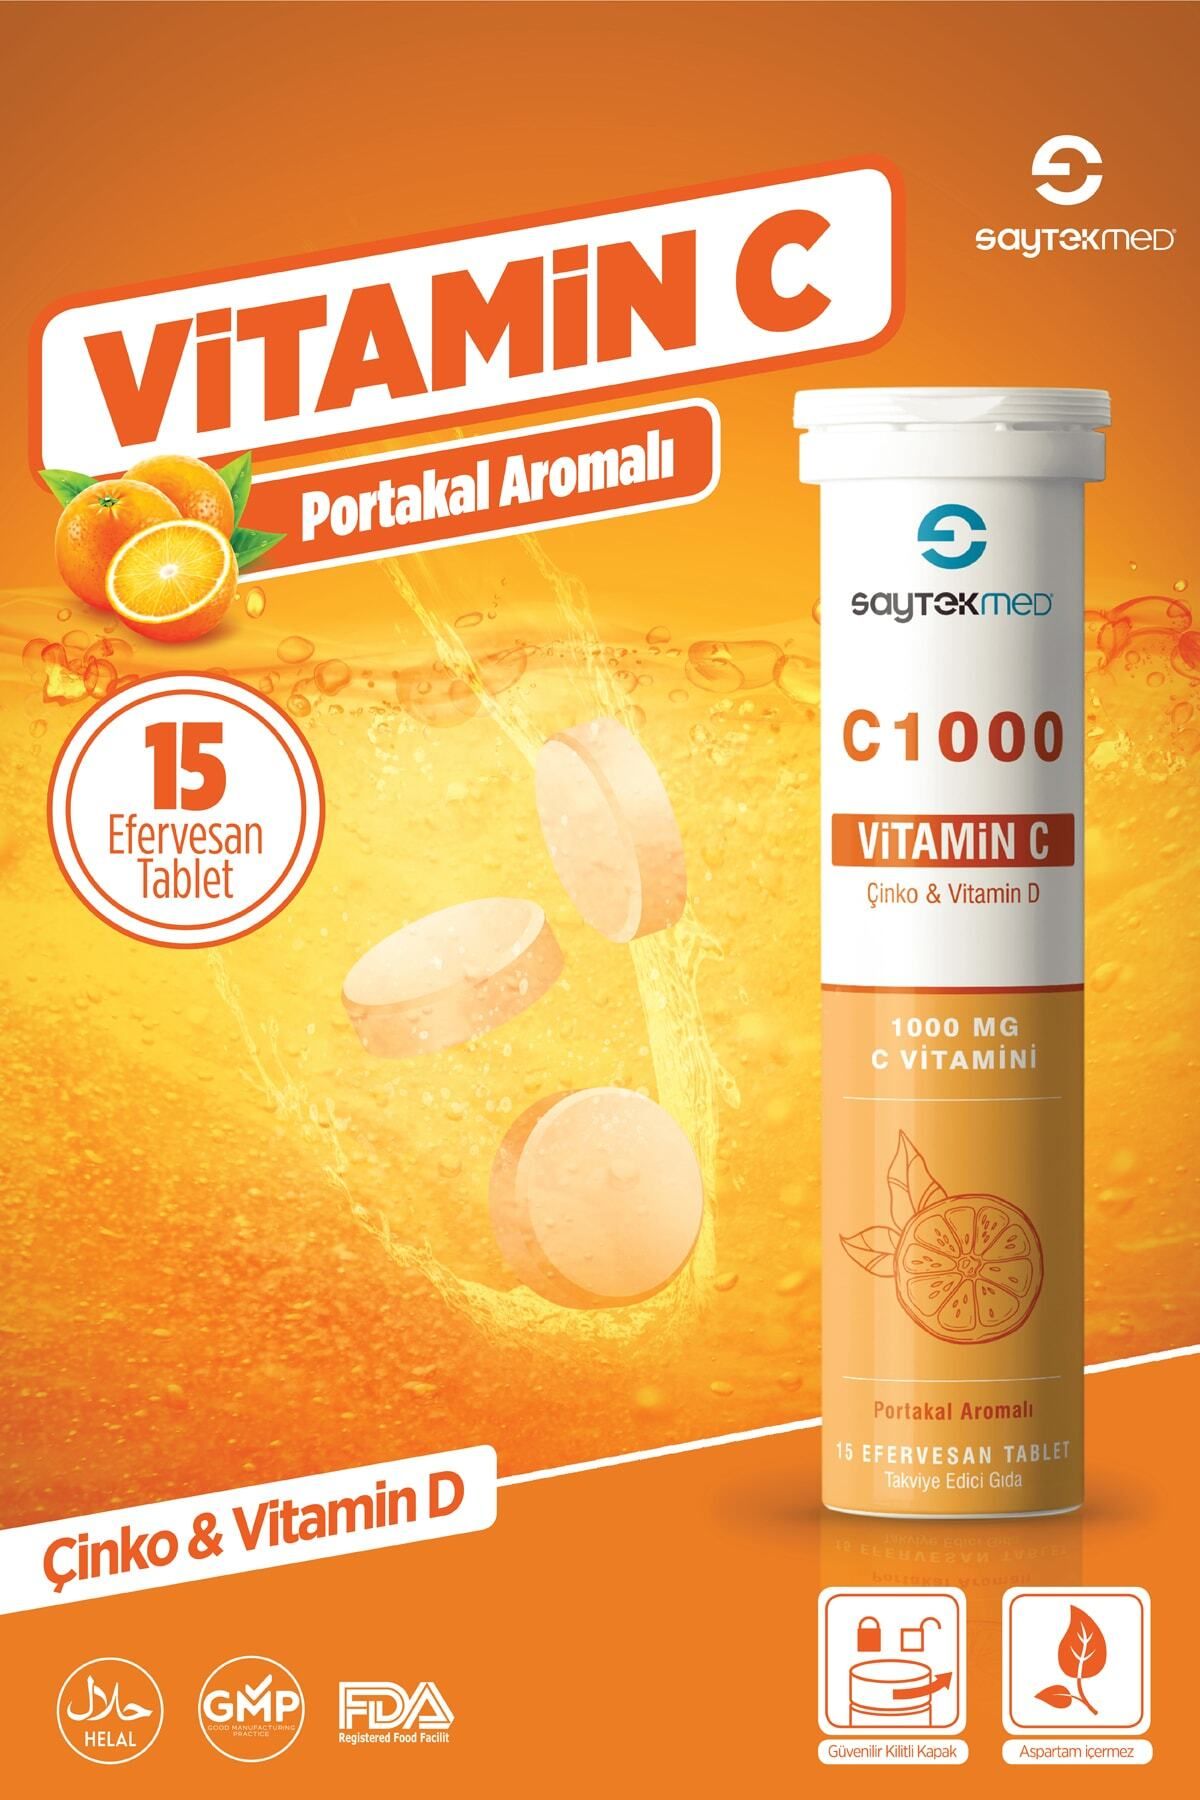 SAYTEKMED C1000, C Vitamini, D Vitamini Ve Çinko Içeren Takviye Gıda 15 Efervesan Tablet